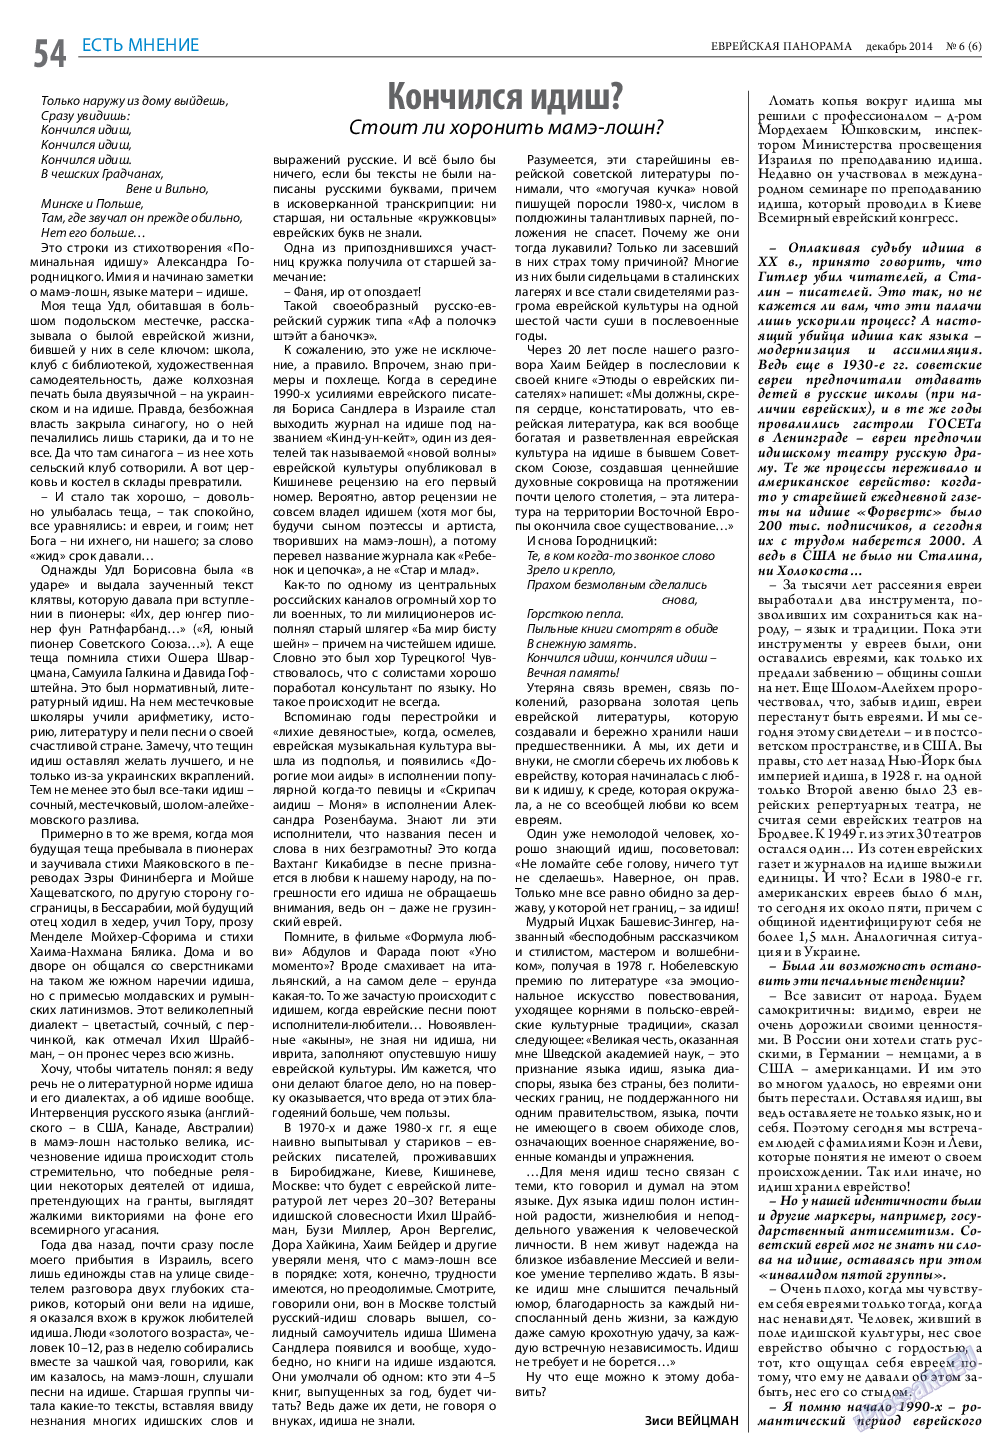 Еврейская панорама, газета. 2014 №6 стр.54